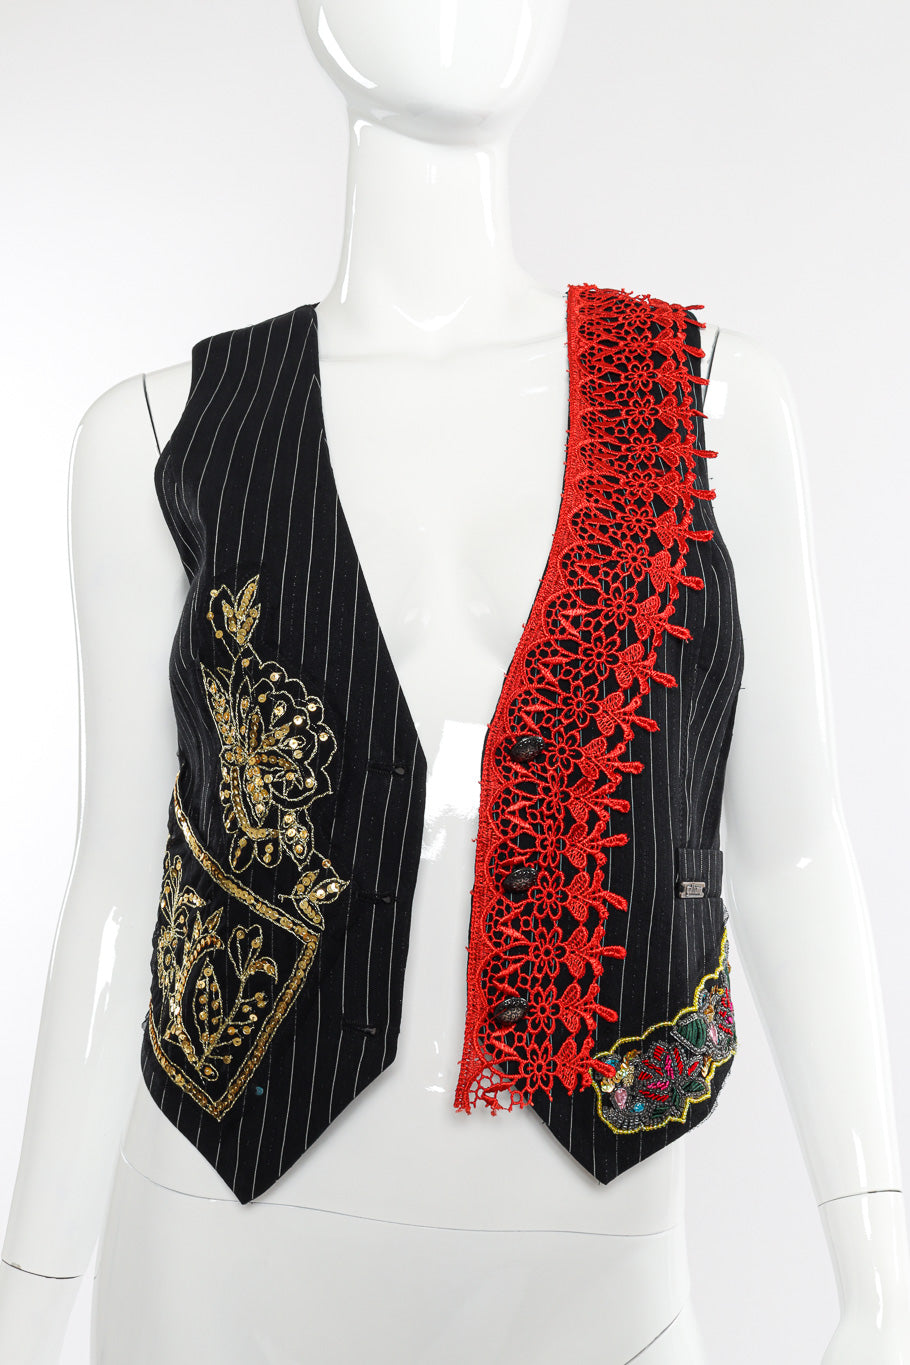 Pinstripe vest by John Galliano on mannequin unbuttoned @recessla